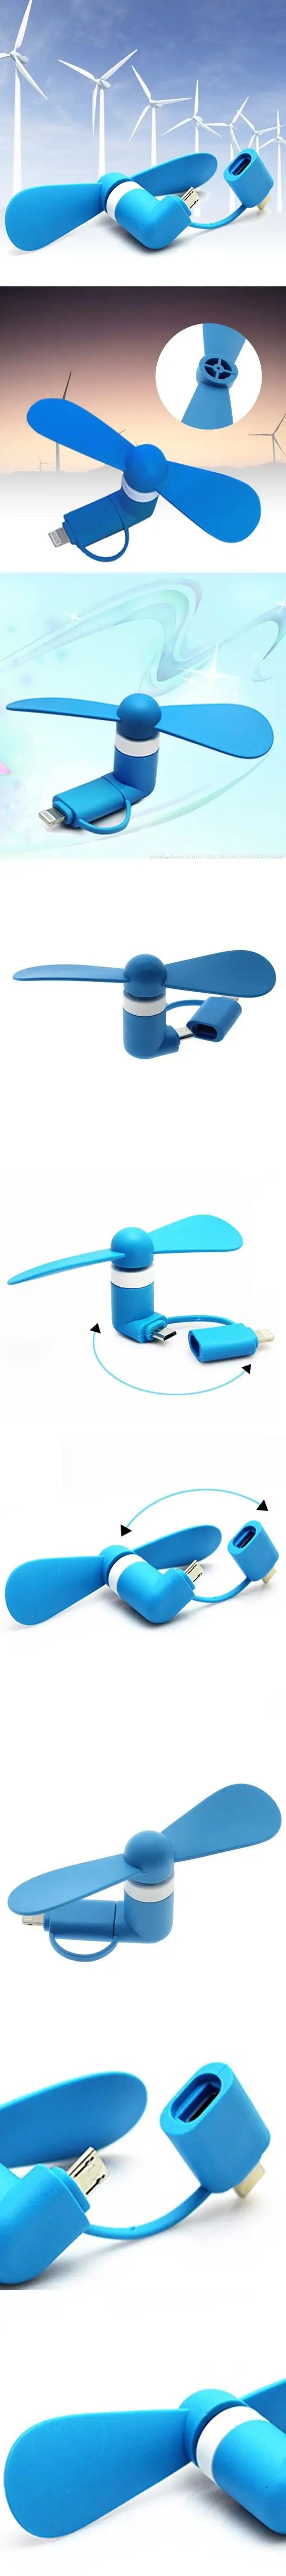 Портативный, цвета леденцов путешествия мини USB вентилятор для iPhone Android телефон синий APE